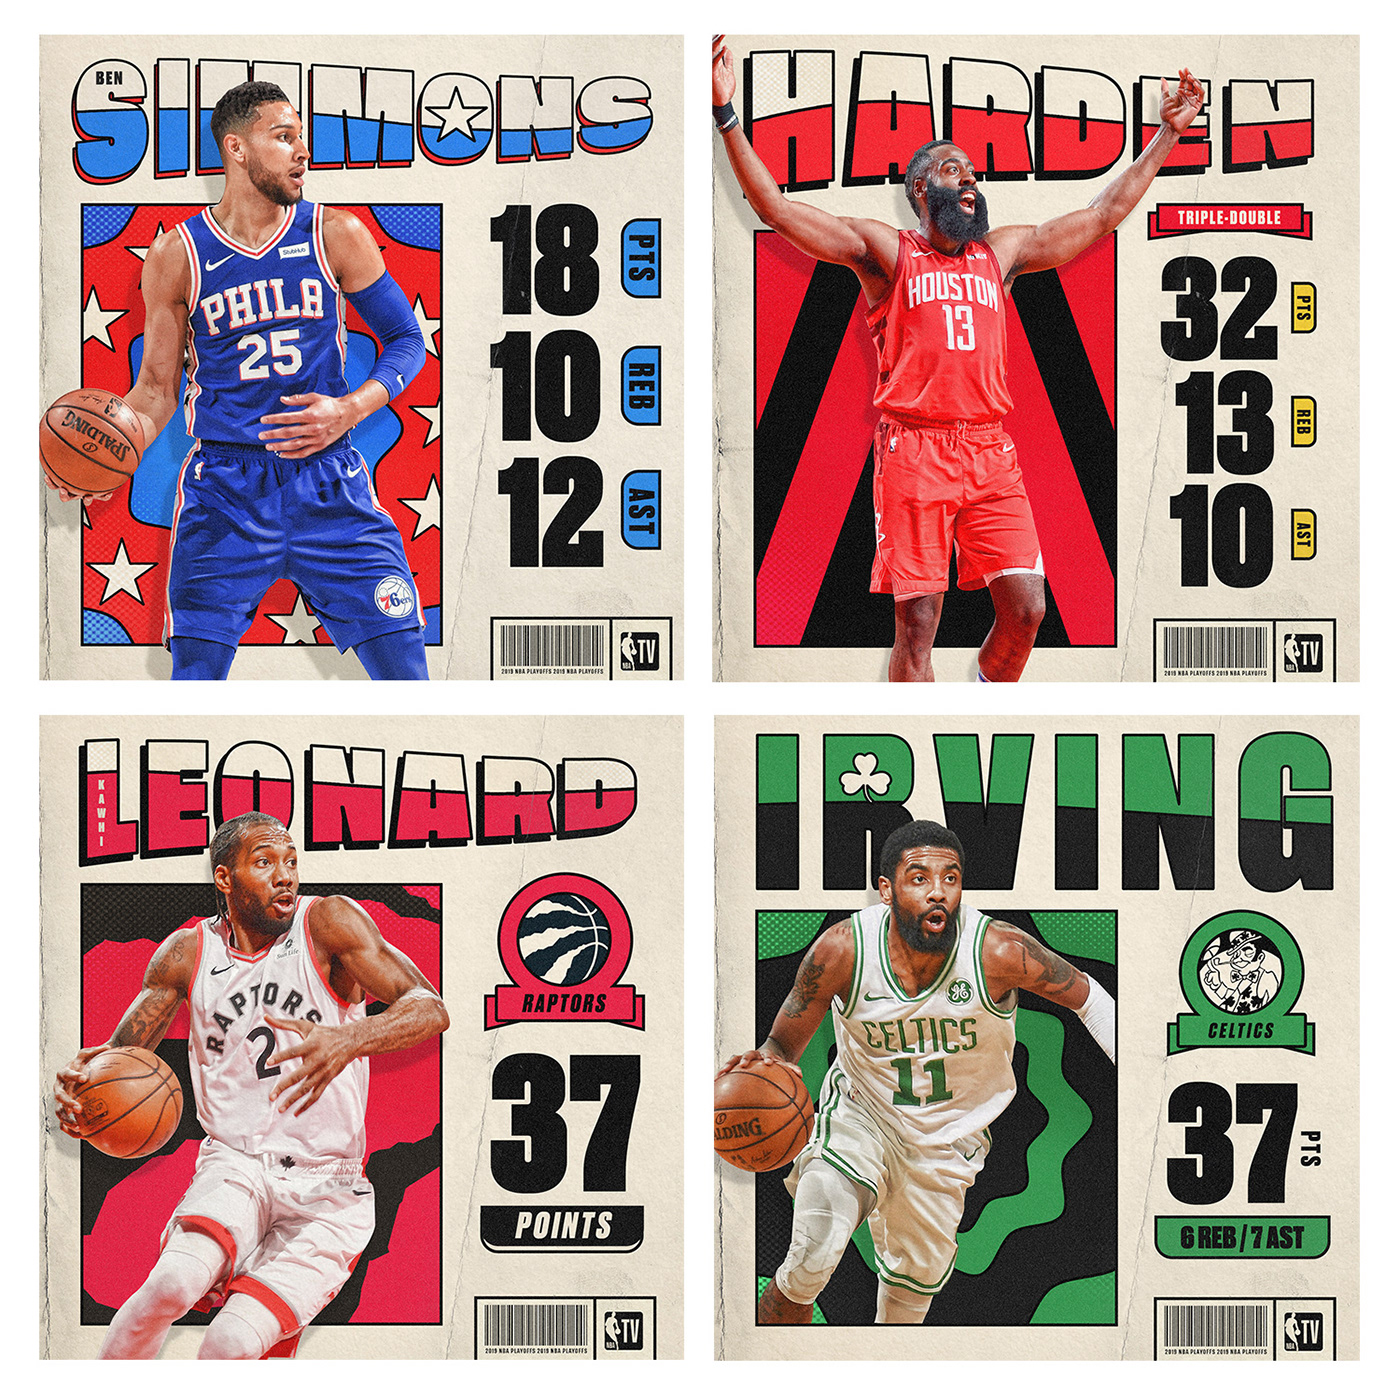 NBA playoffs NBA Finals kawhi leonard raptors SMSports Sports Design NBA basketball sports